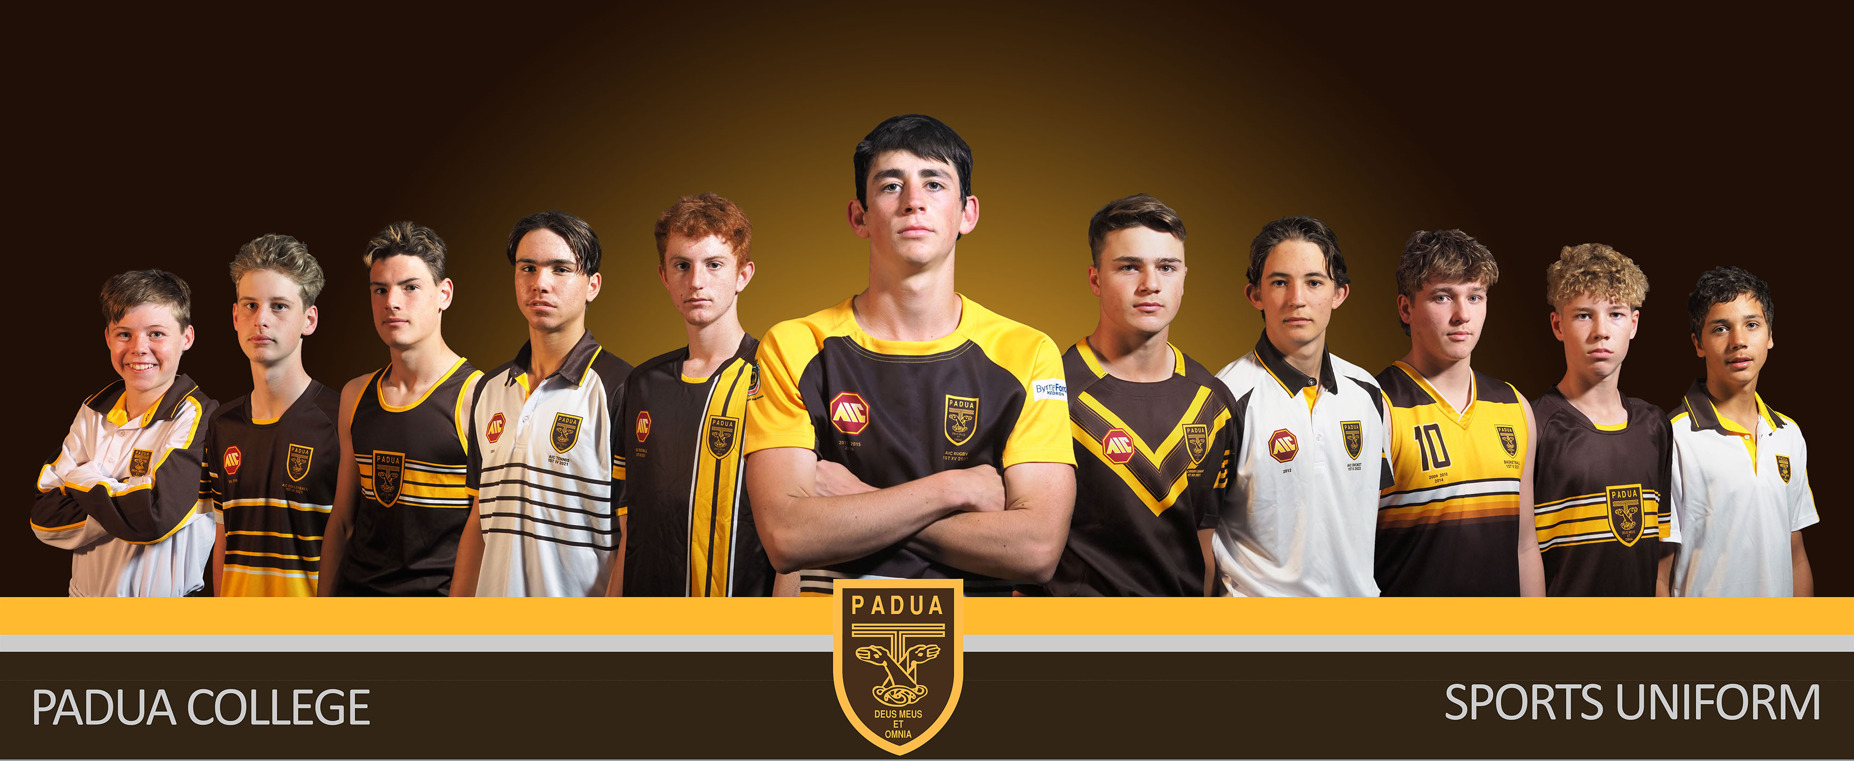 New Sports Uniform - Padua College